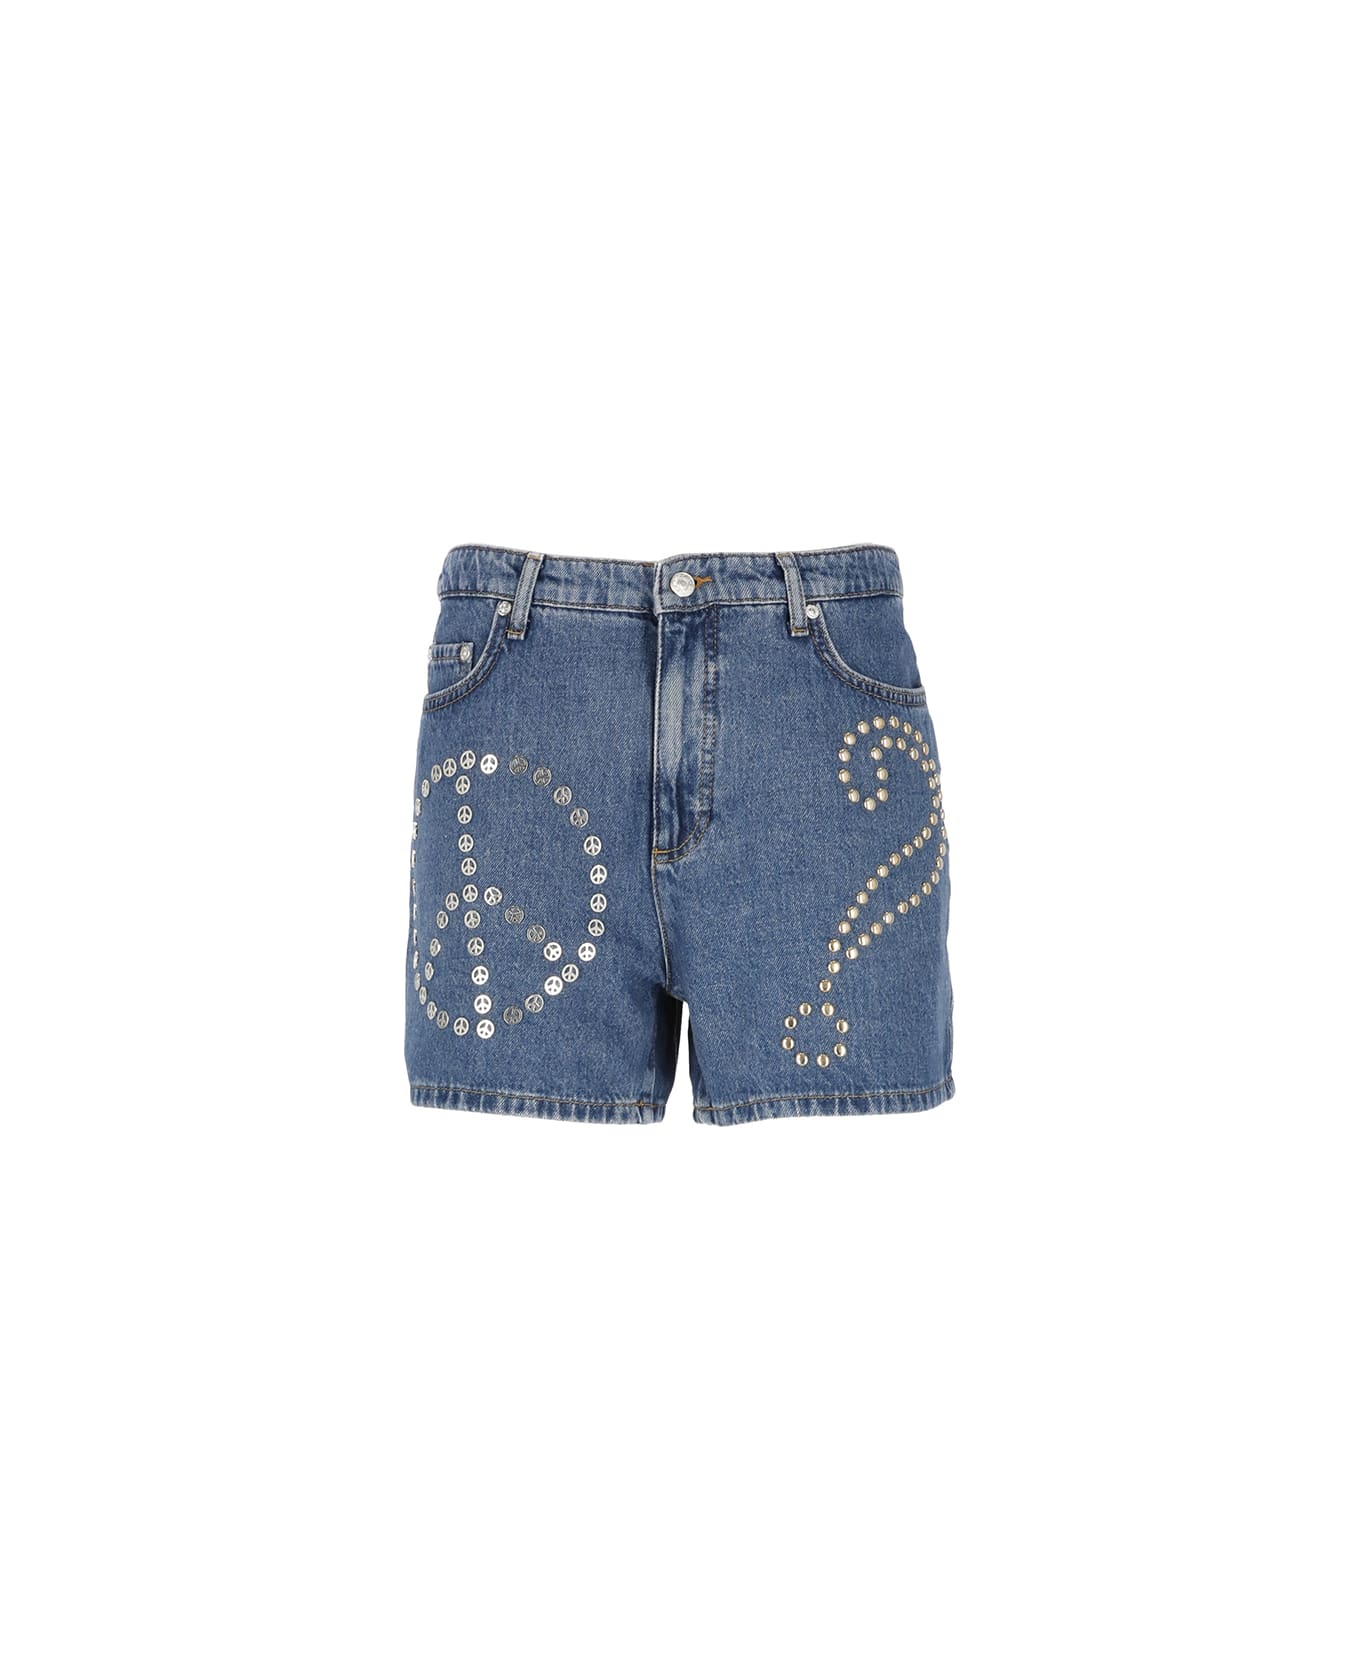 M05CH1N0 Jeans Denim Bermuda Shorts - Blue ショートパンツ